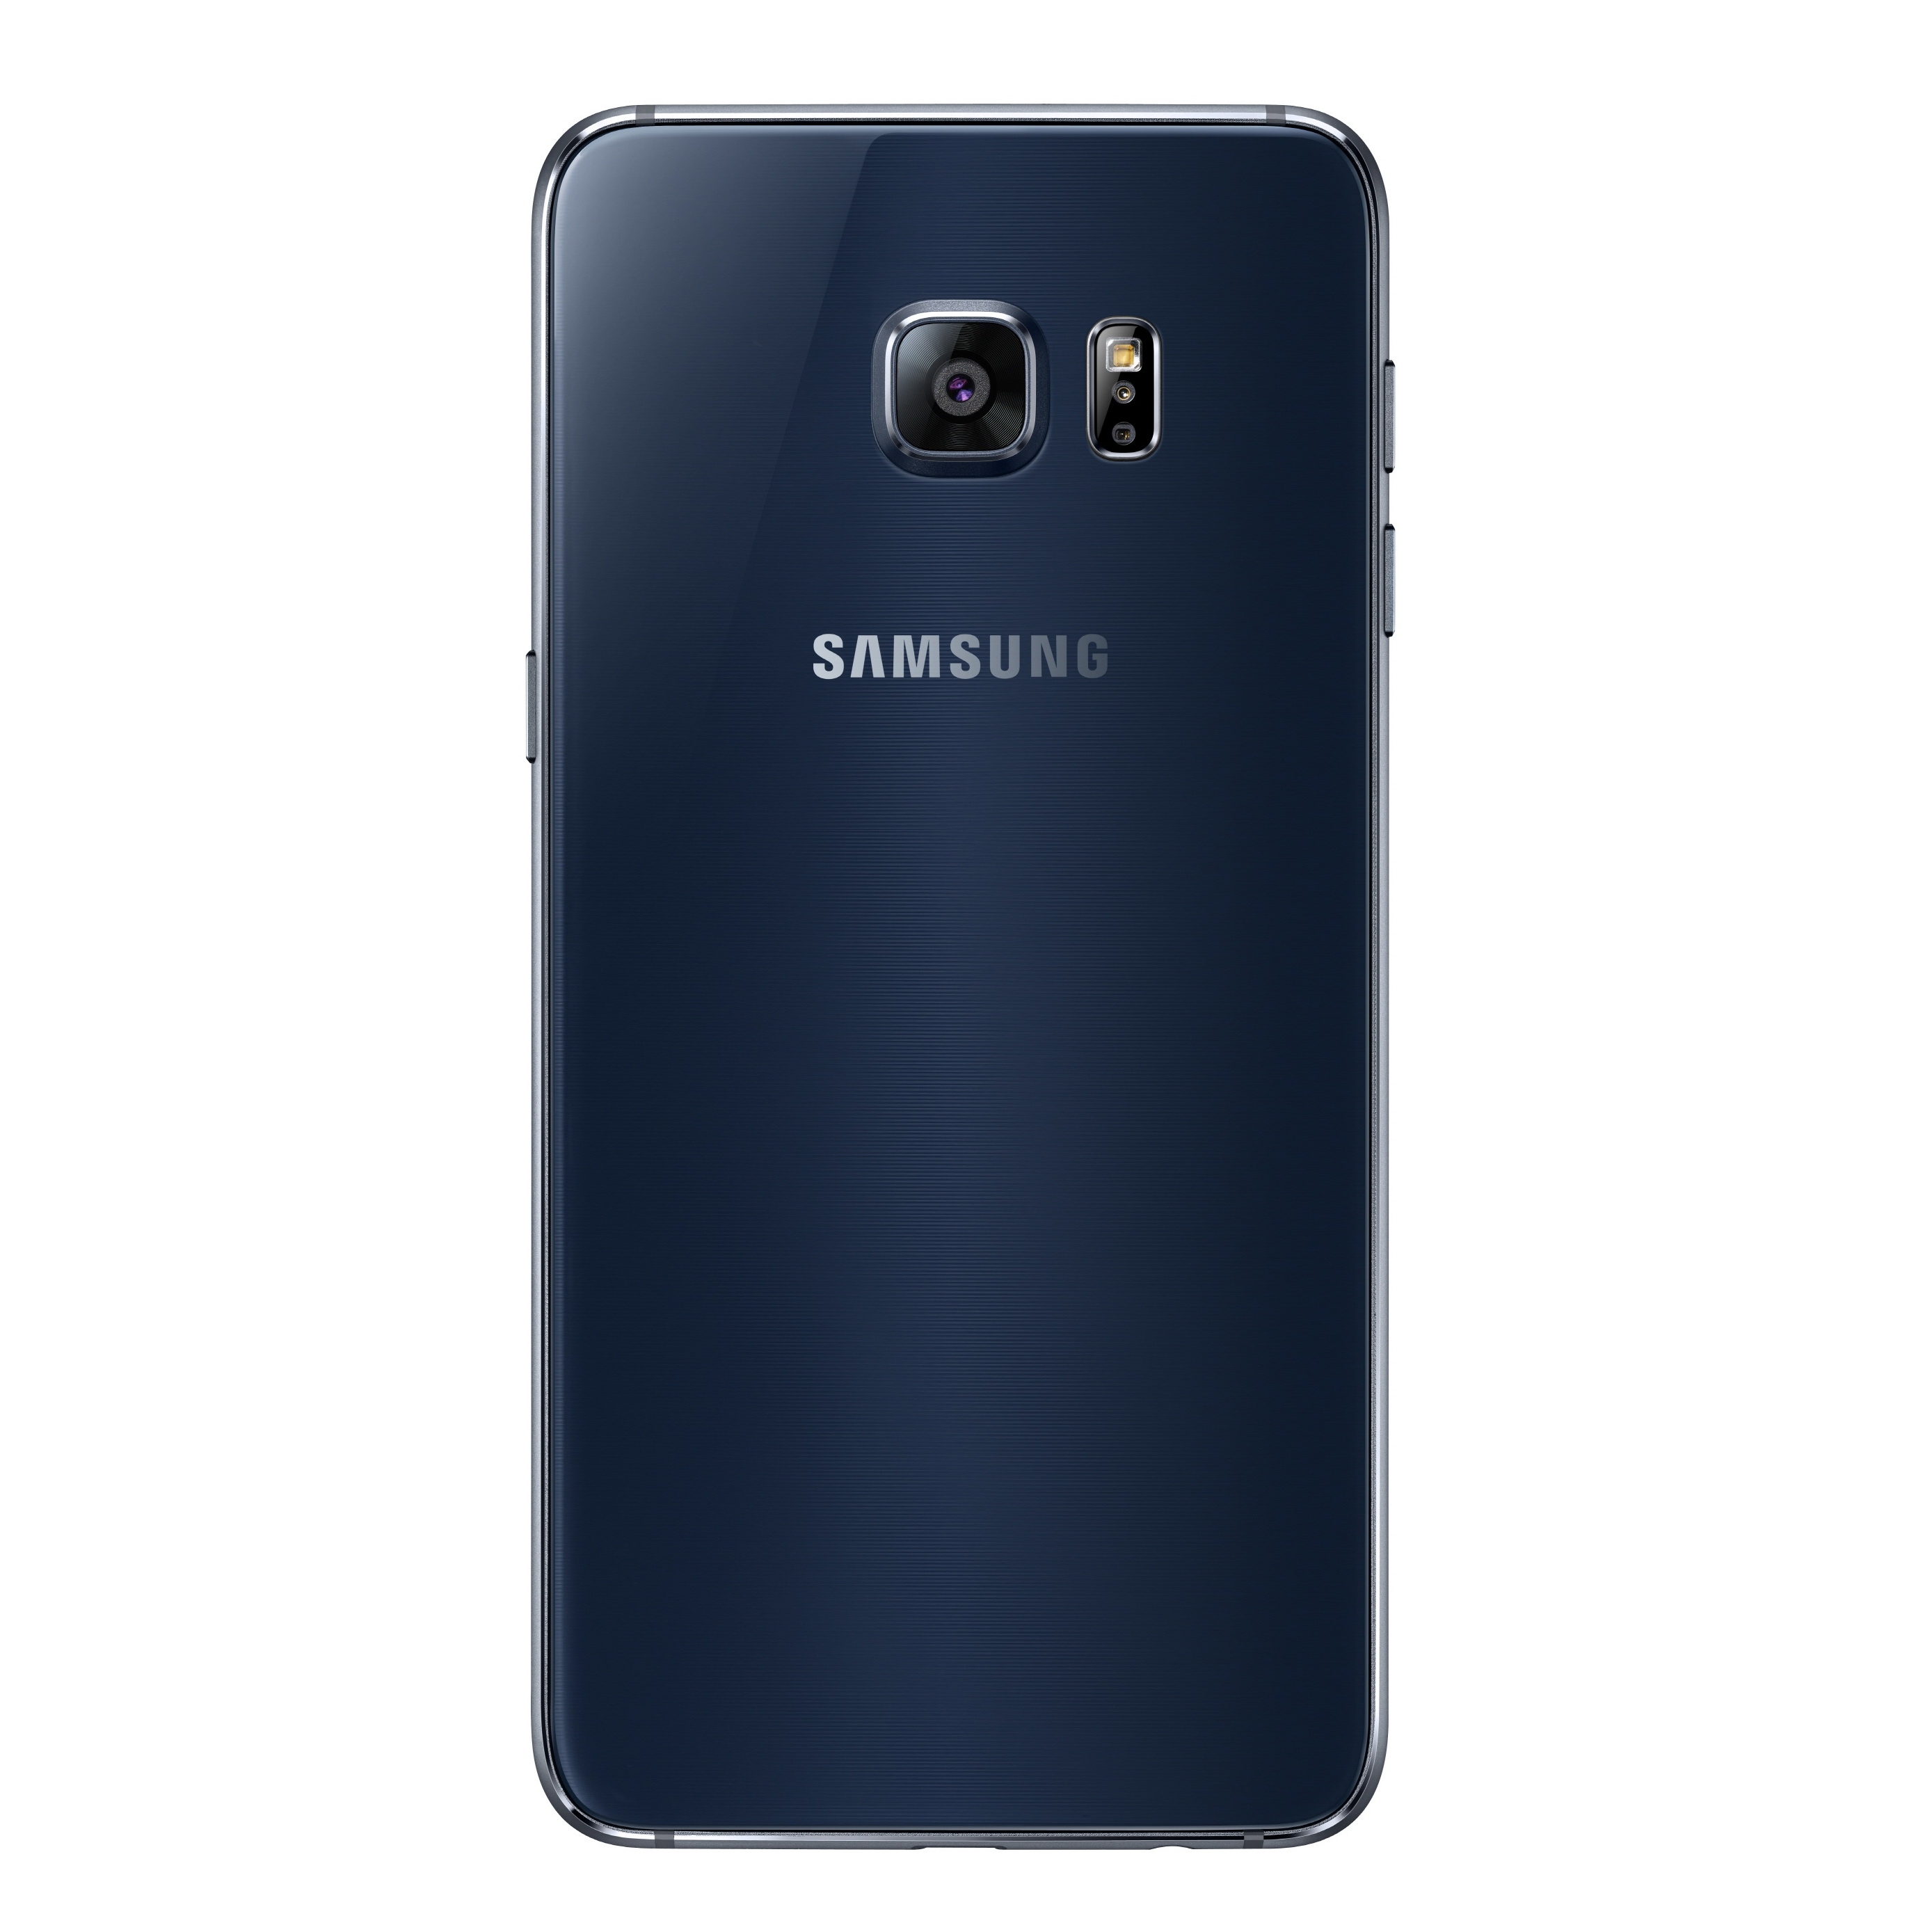 Galaxy S6 Edge Plus 32GB